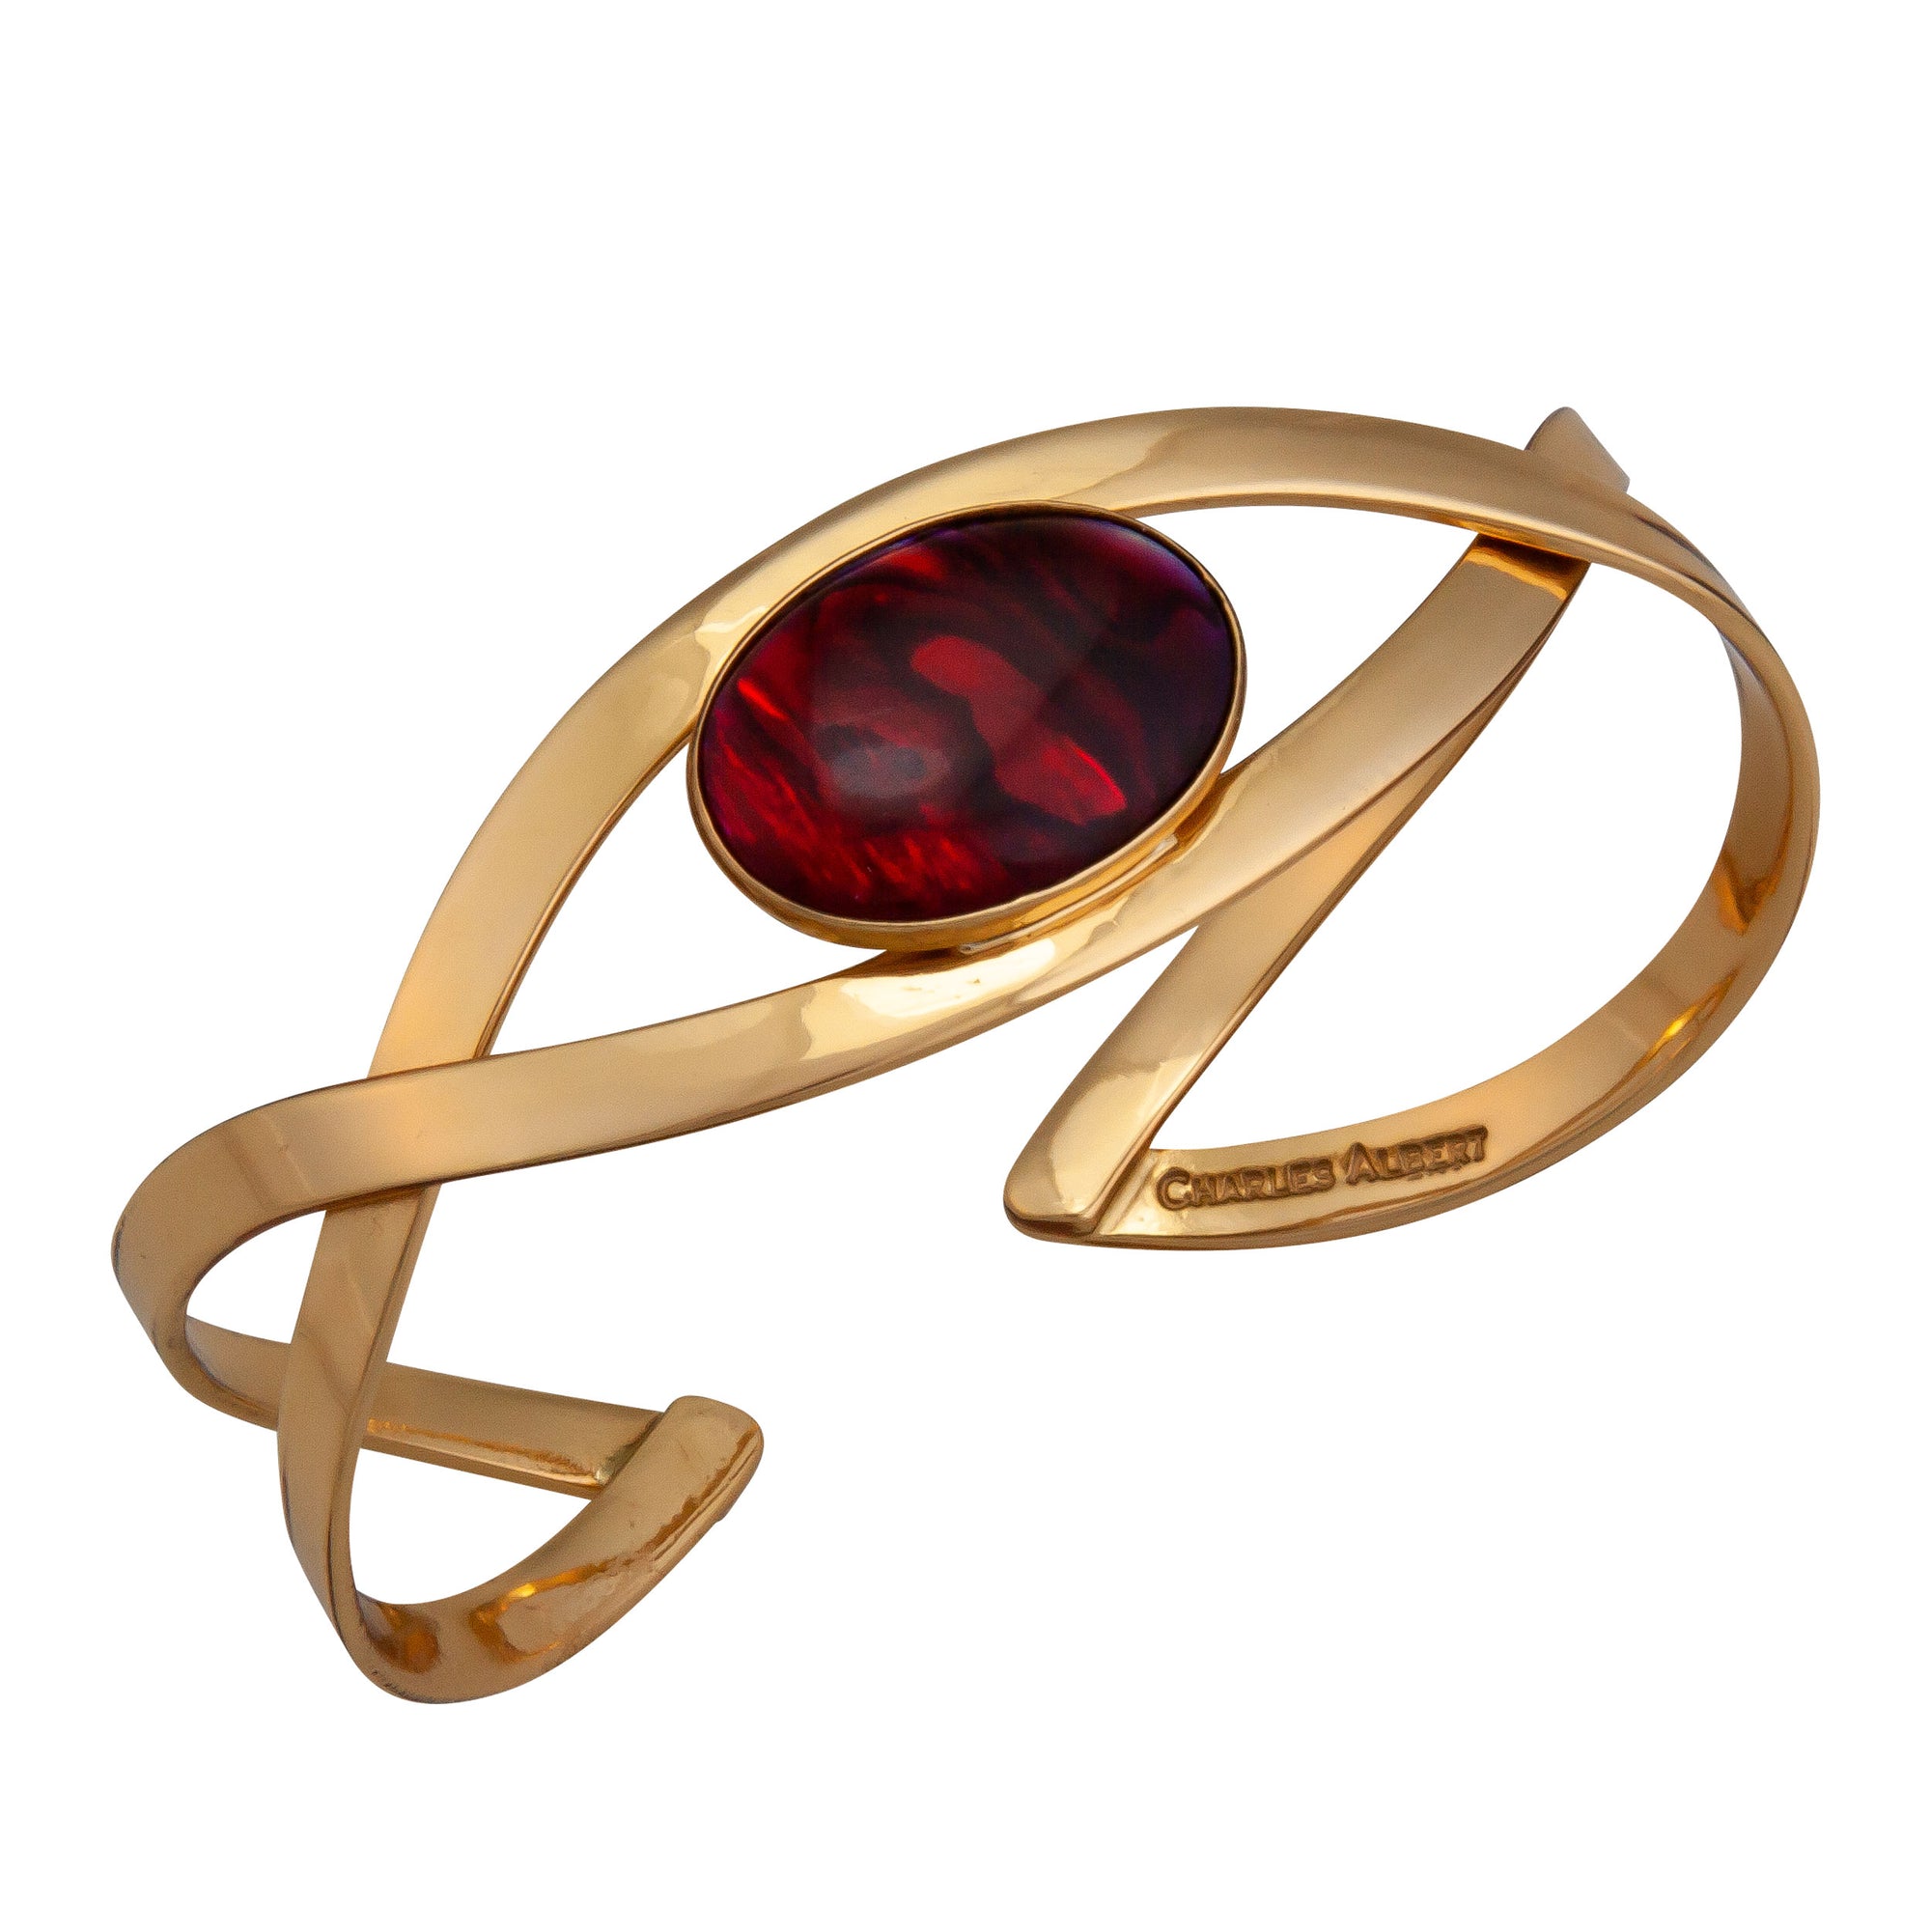 Charles Albert Jewelry - Alchemia Red Abalone Infinity Cuff Bracelet